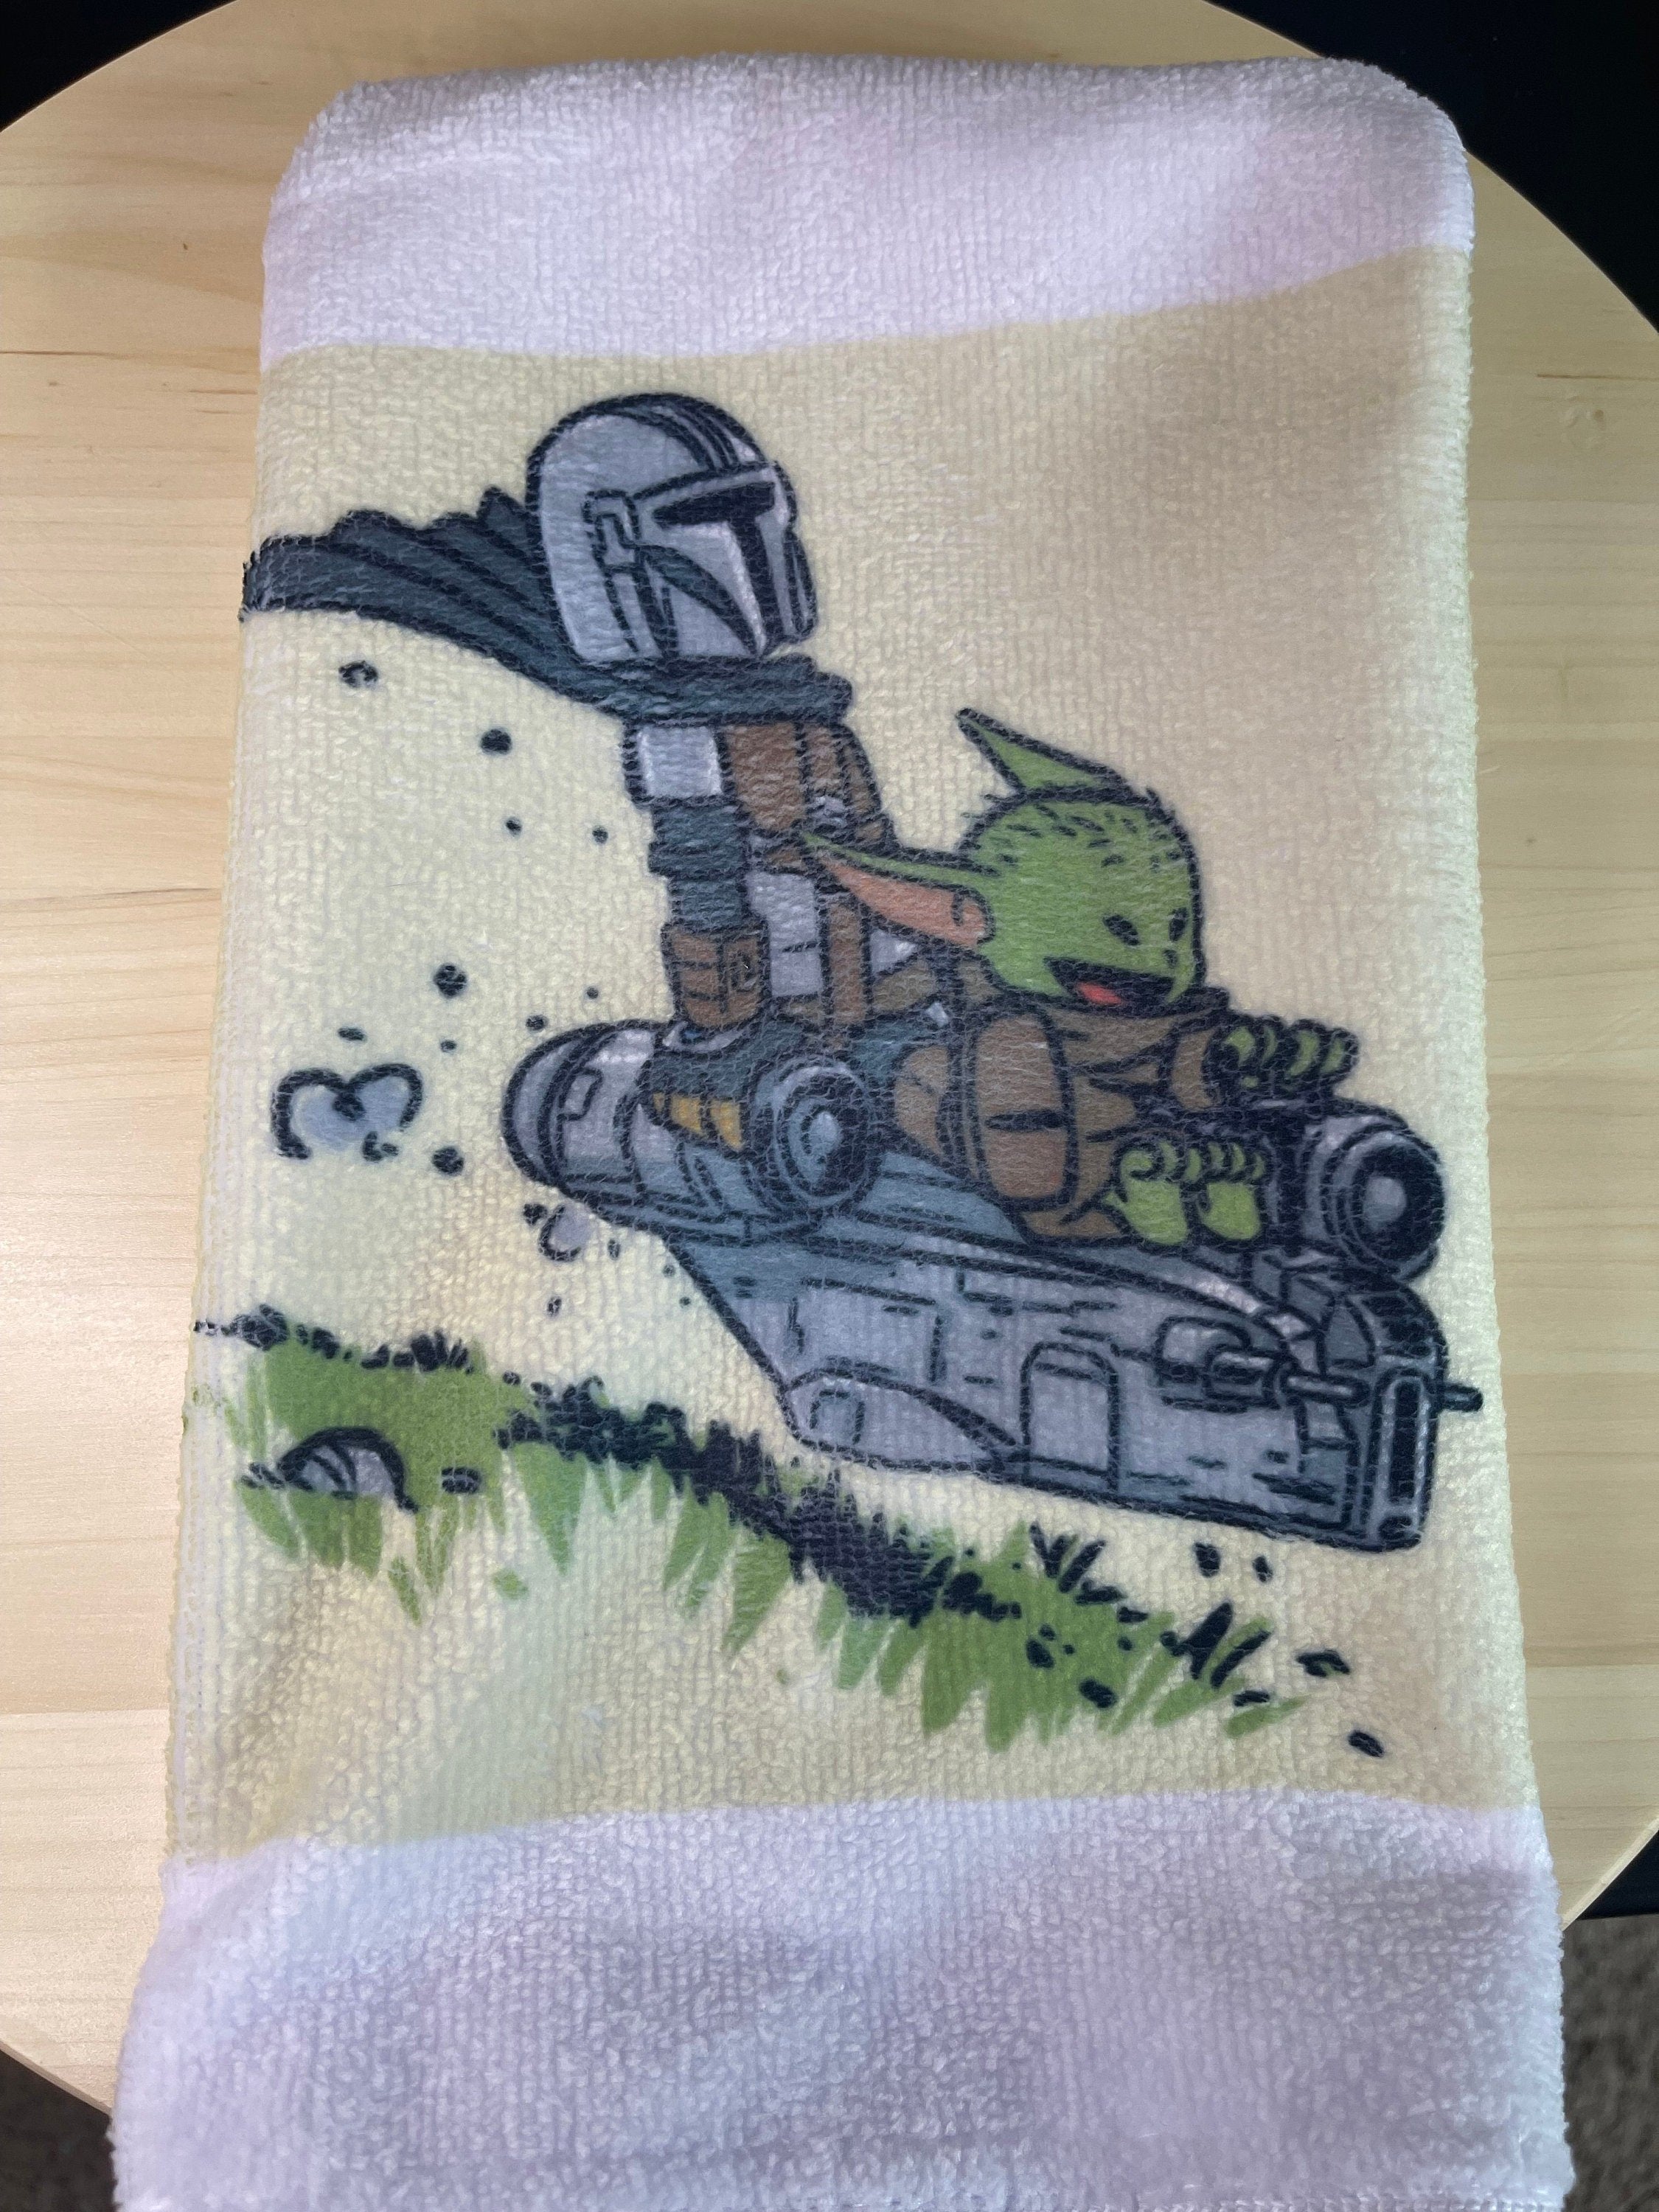 Inspired Mando Yoda Hand Towels towels